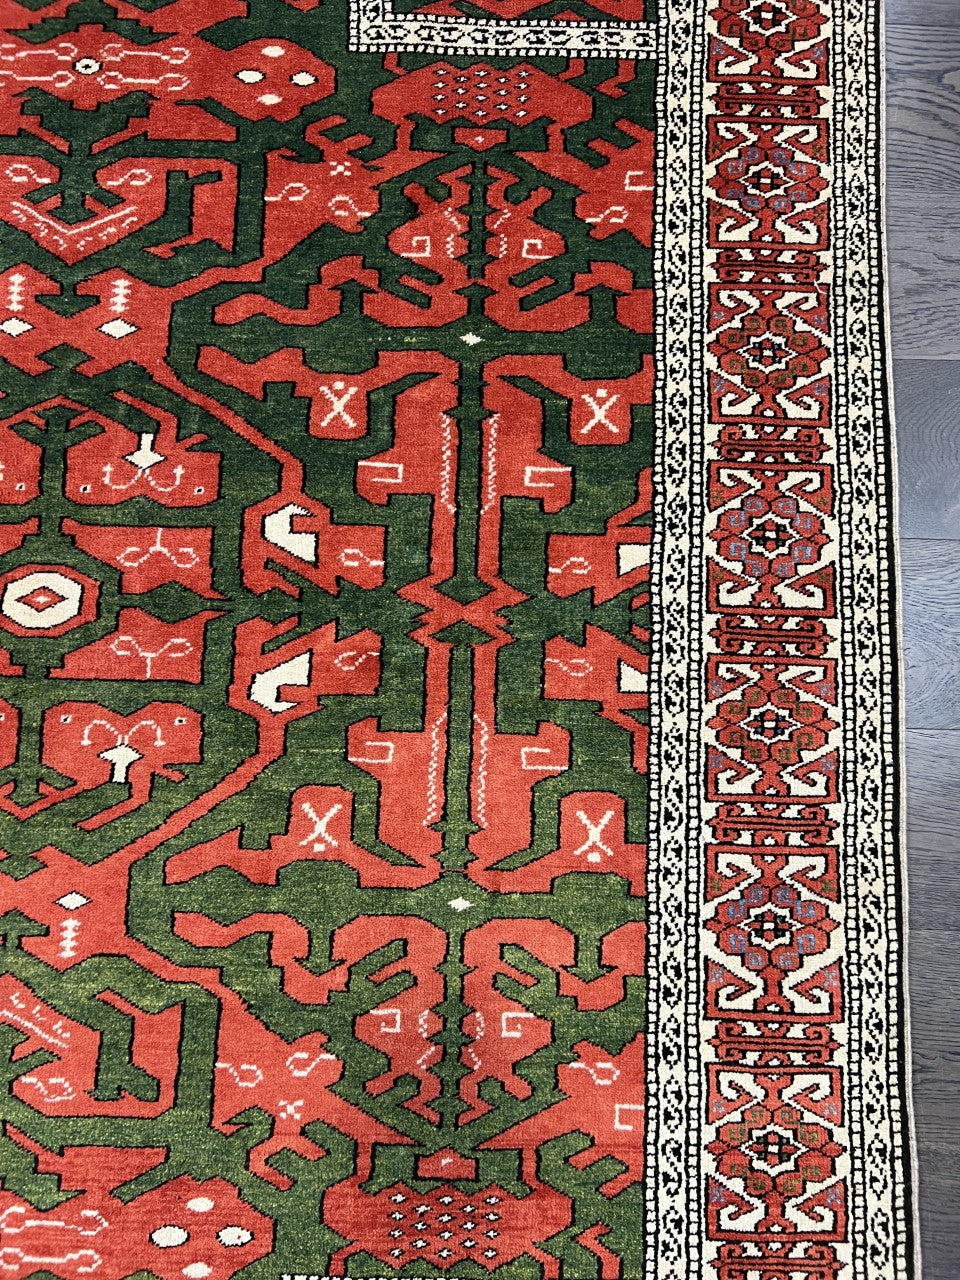 Beautiful vintage Handmade Caucasian Shirwan rug